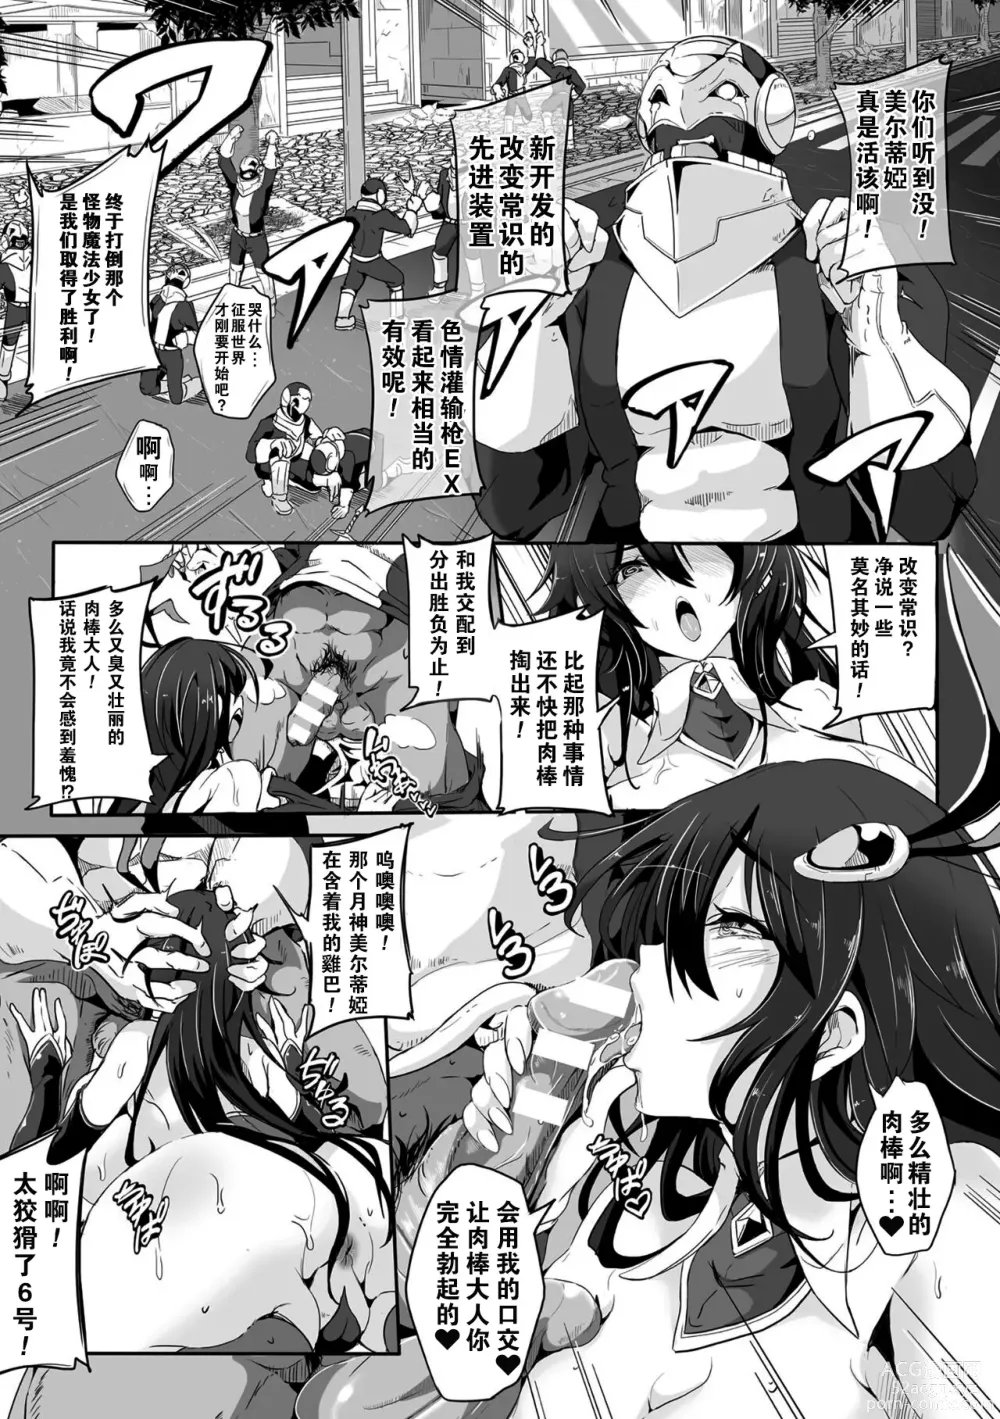 Page 9 of manga Defeating Magical Girl Luna Meltia-Operation to change common sense-